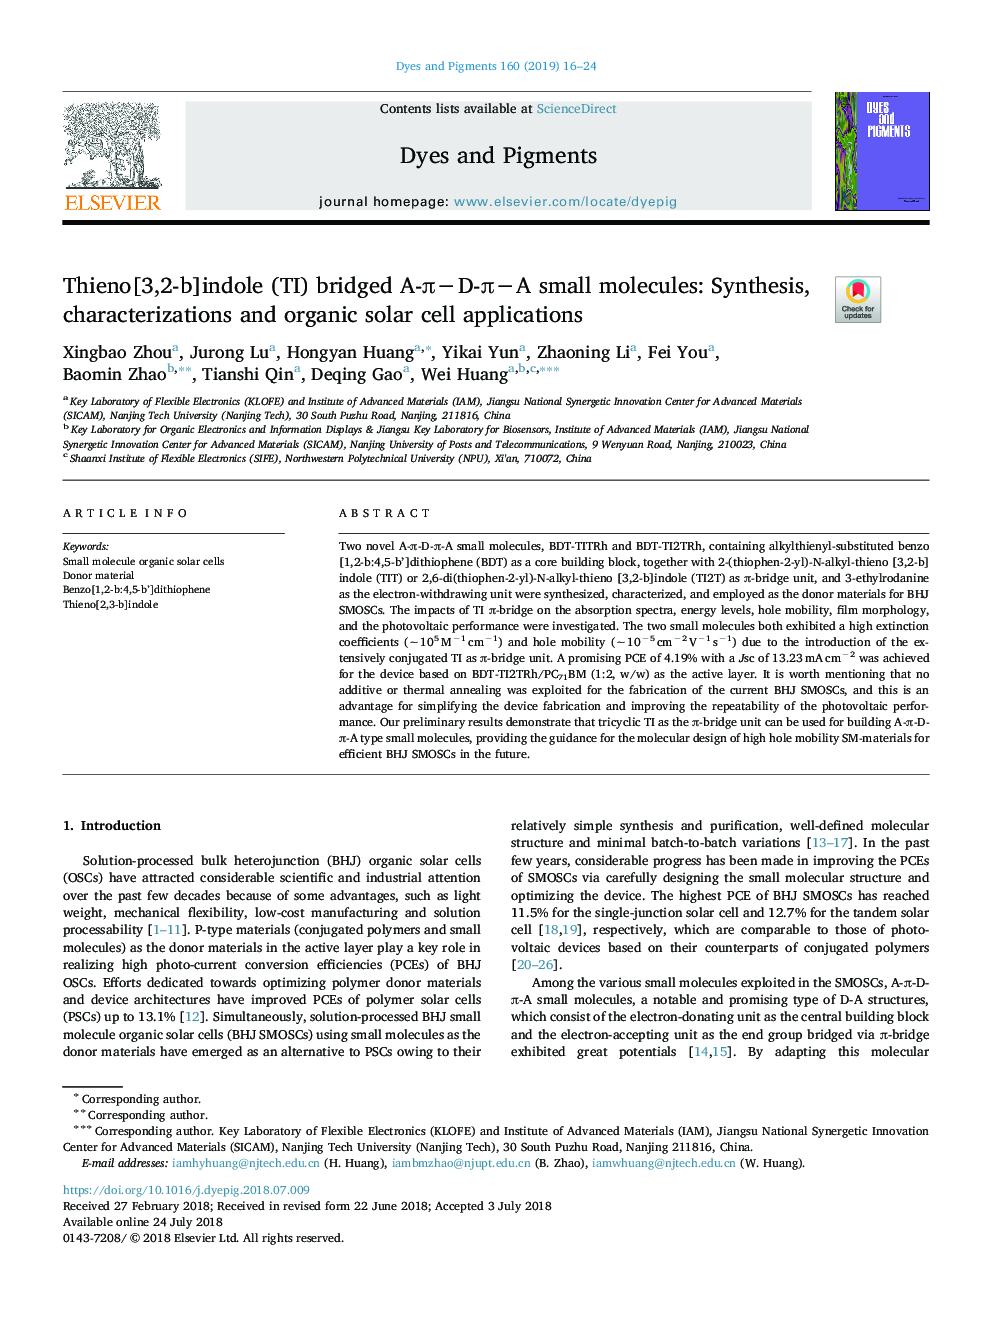 Thieno[3,2-b]indole (TI) bridged A-ÏâD-ÏâA small molecules: Synthesis, characterizations and organic solar cell applications